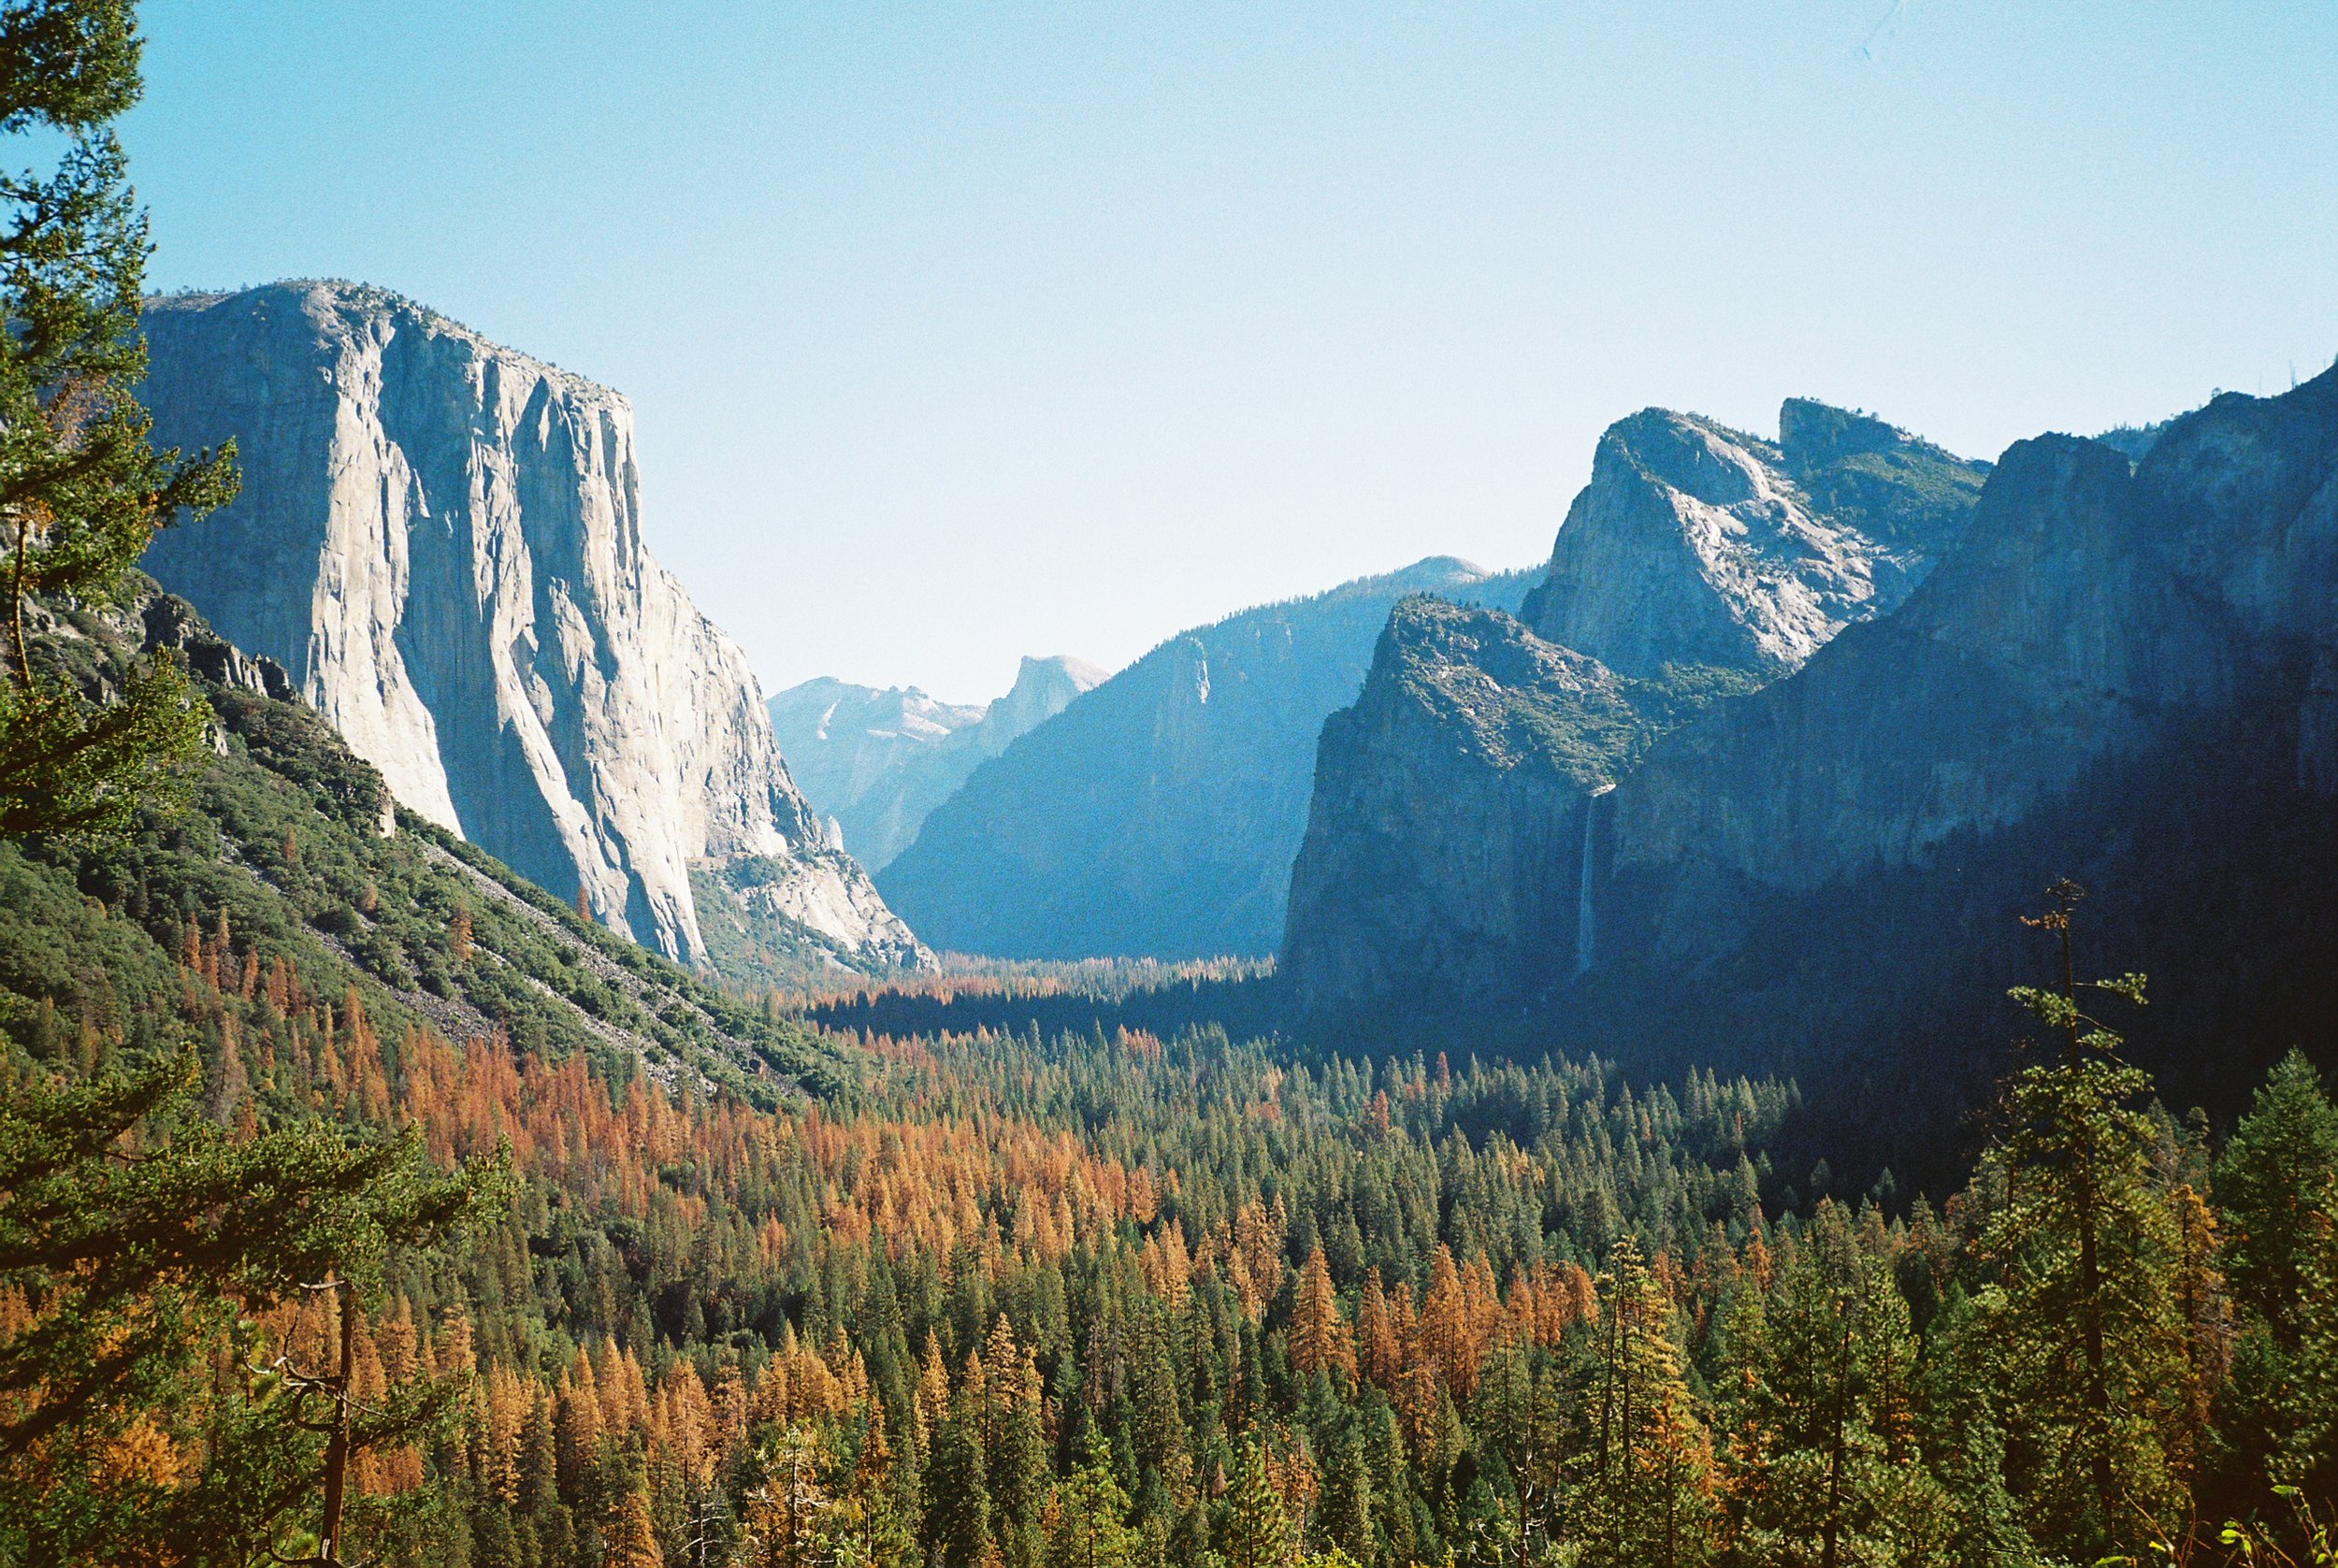   Yosemite National Park, California, USA   Rollei AFM 35 